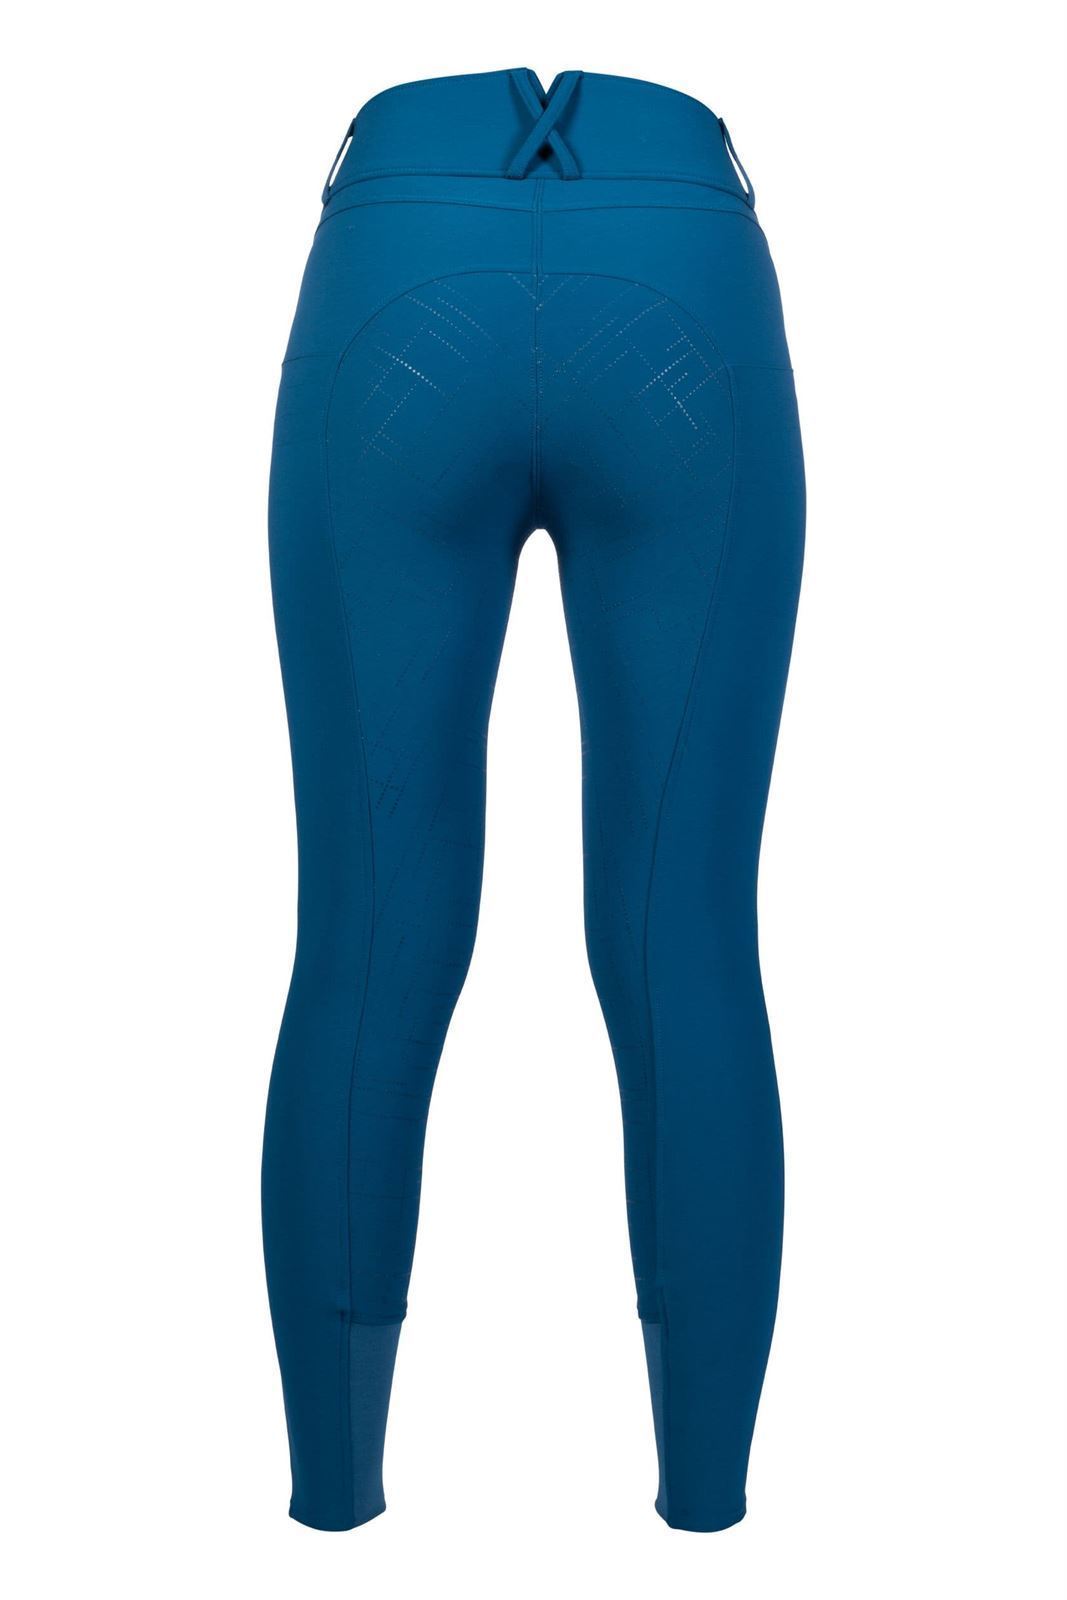 Pantalón mujer HKM Sports Equipment Port royal azul culera grip tejido grueso termoaislante TALLA 34 - Imagen 2